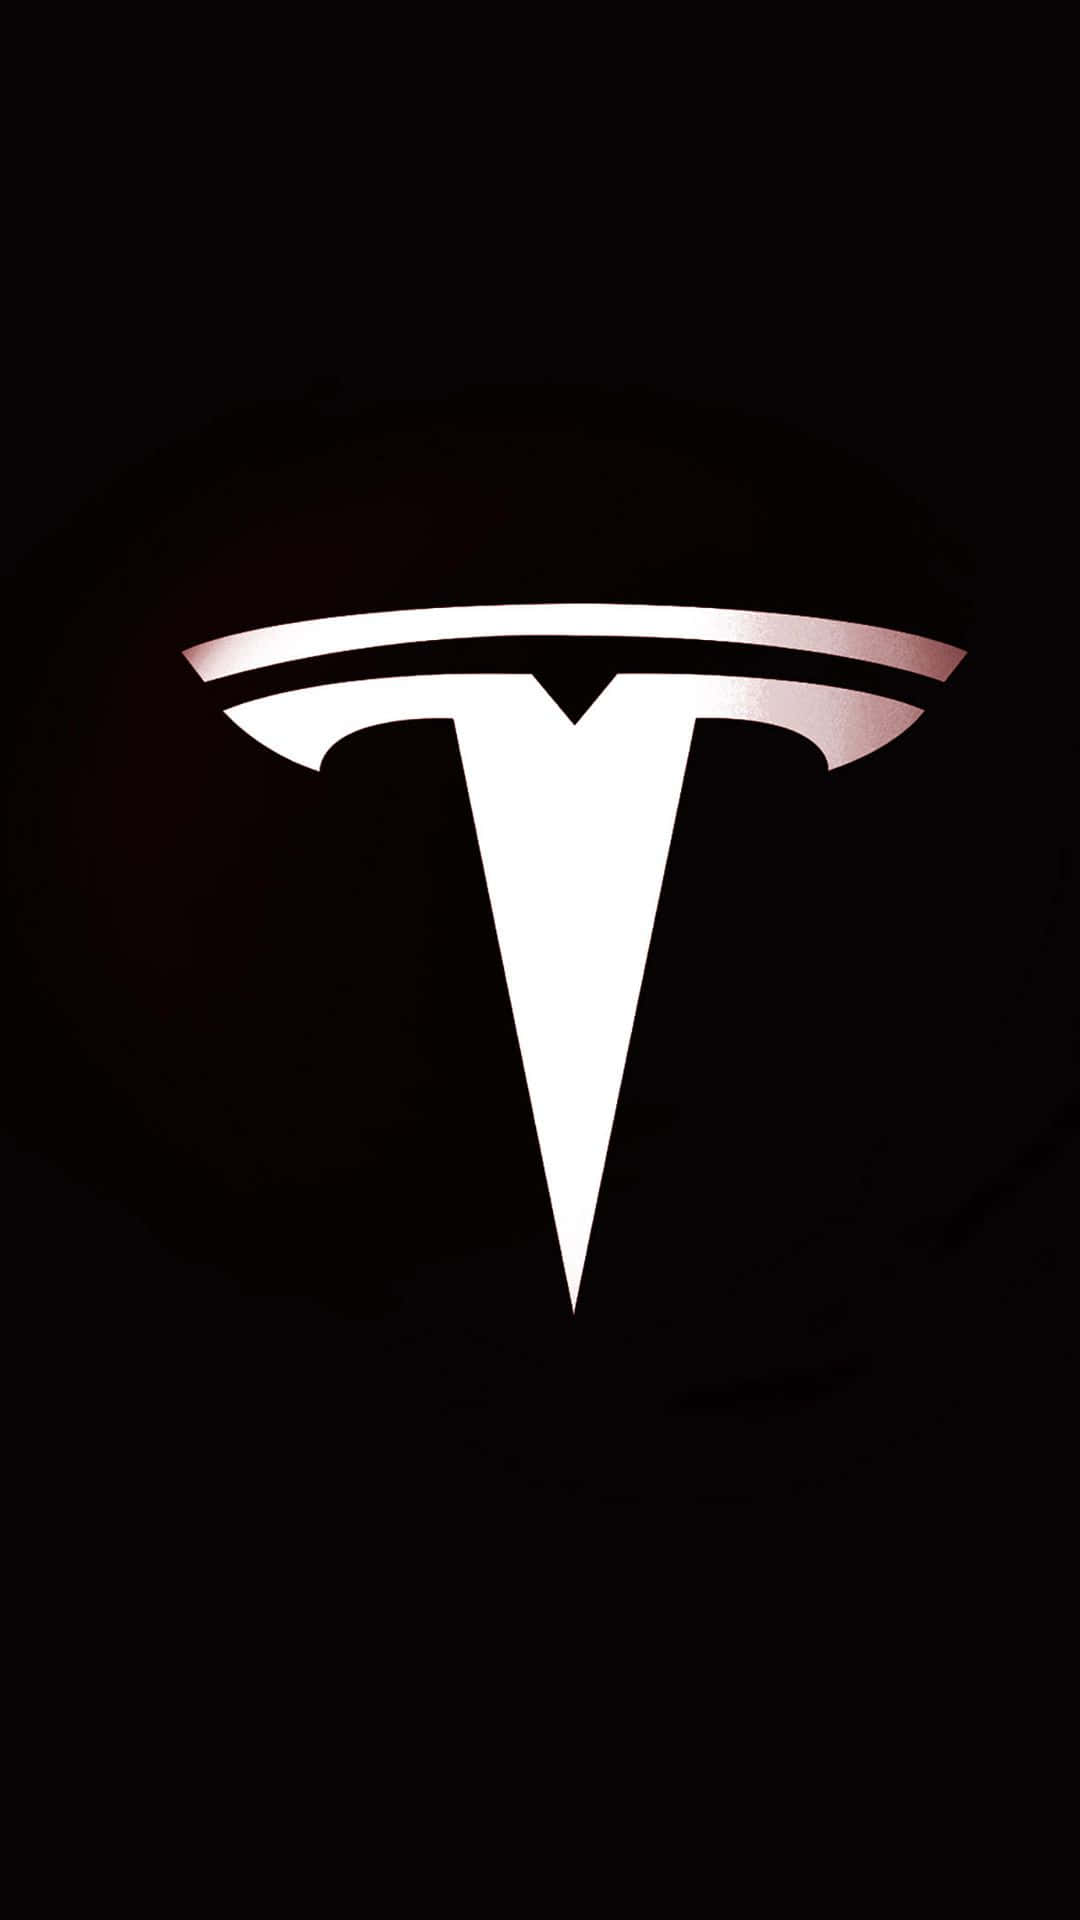 Skrivbordsbakgrundeller Mobiltelefon Bakgrundsbild Med Teslas Logotyp. Wallpaper